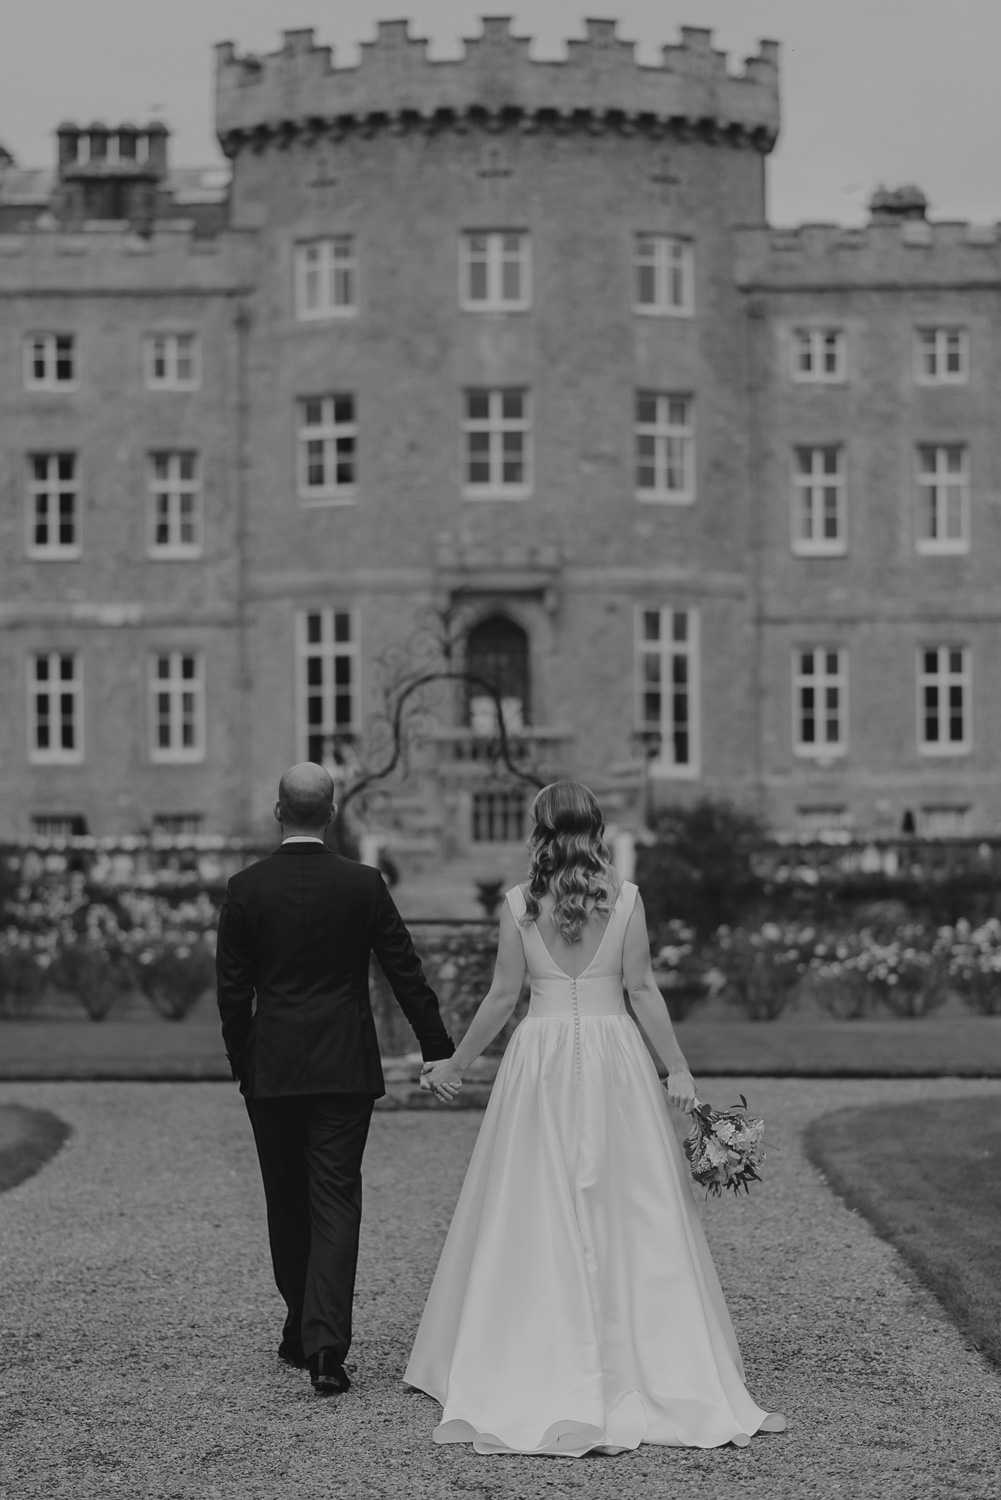 Markree castle wedding photographs -41.jpg